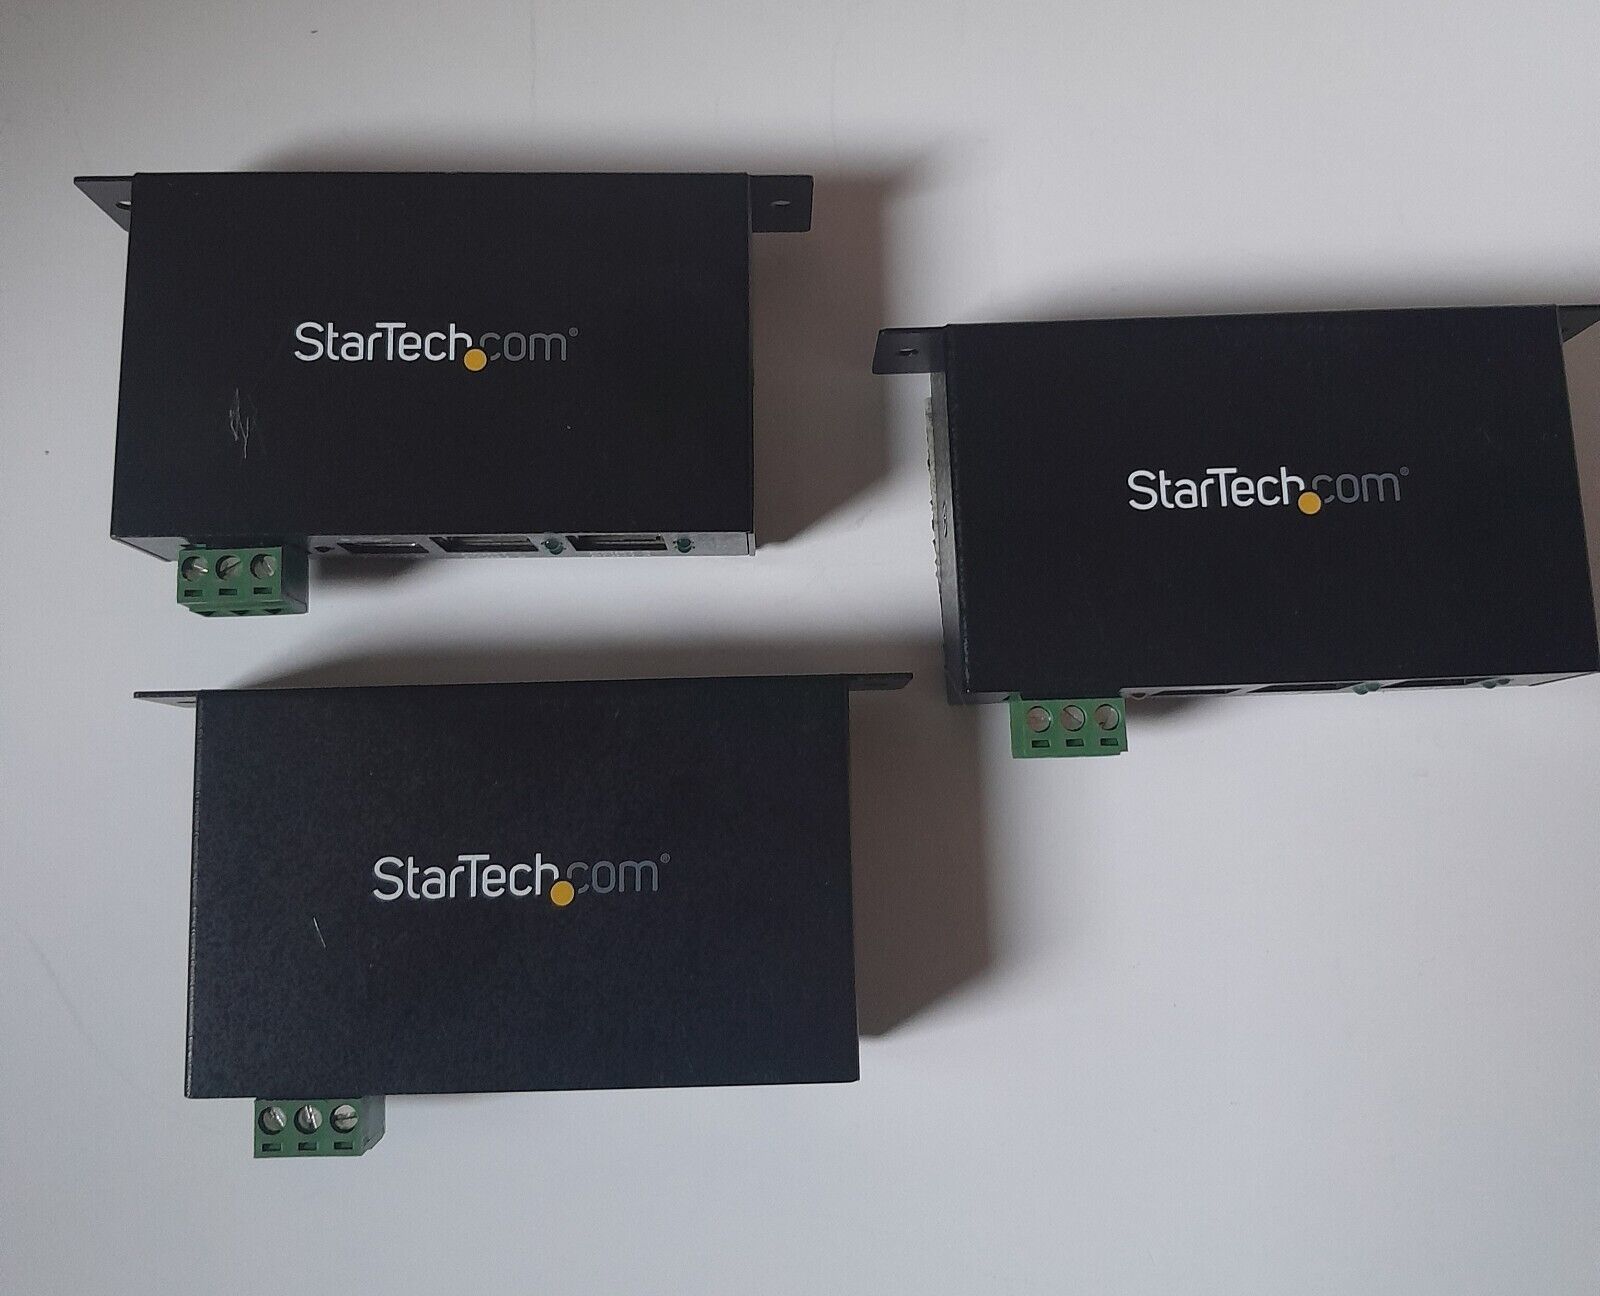 StarTech.com 4 Port USB 2.0 Expandable Hub, ST4200USBM, Metal, Used